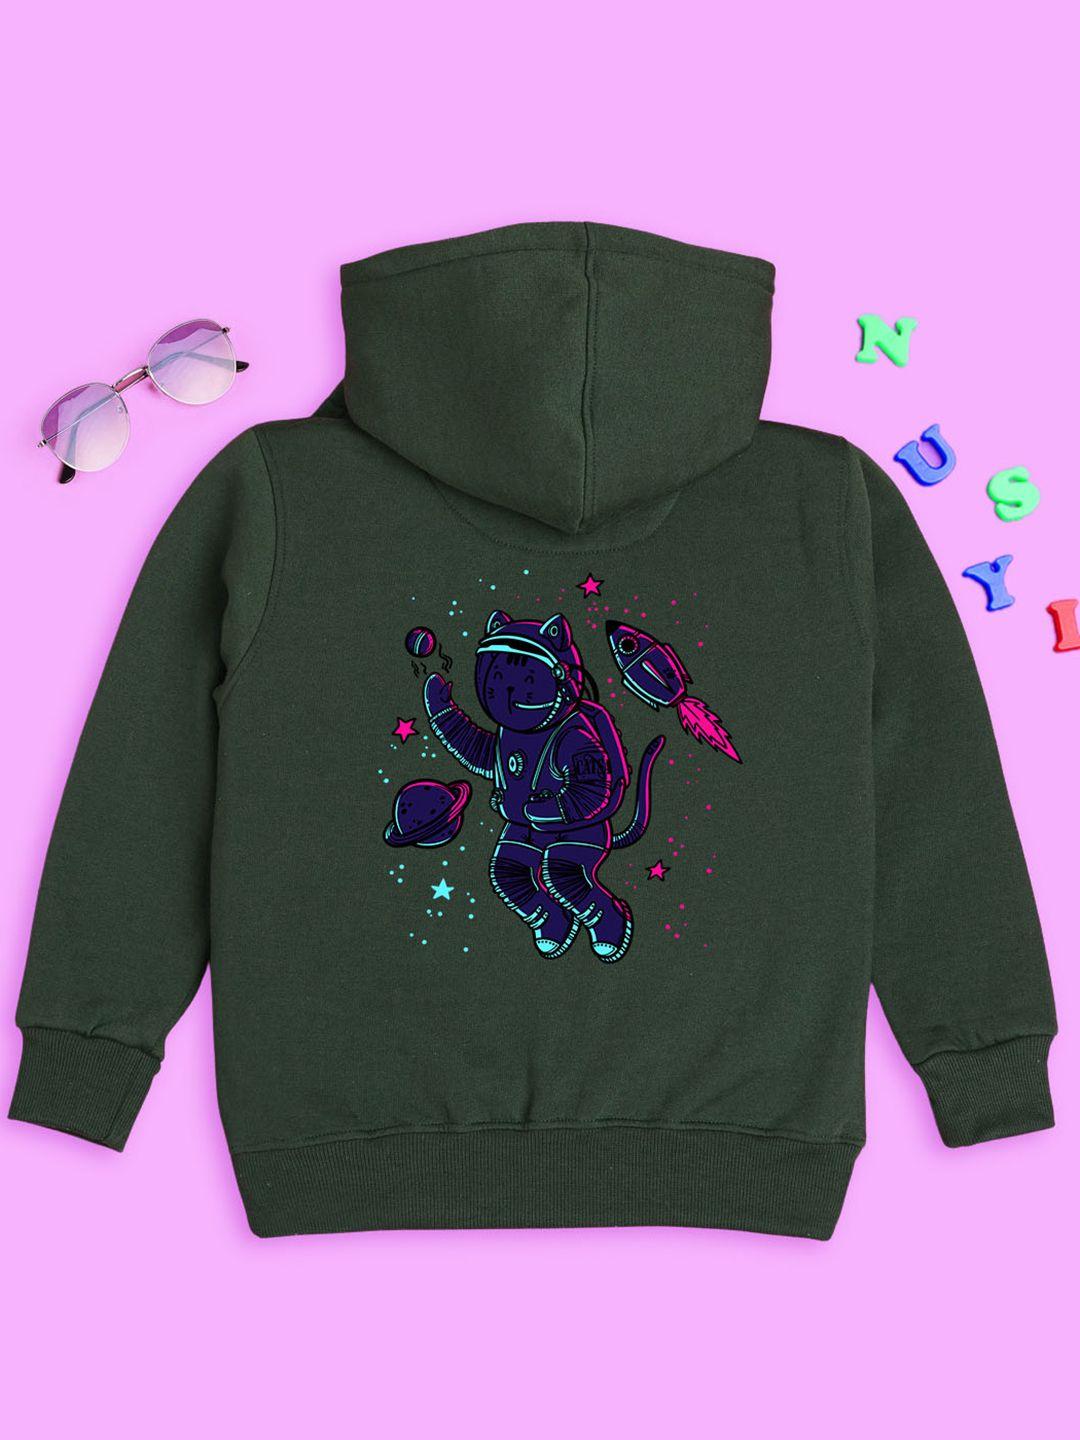 nusyl kids graphic printed hooded fleece sweatshirt